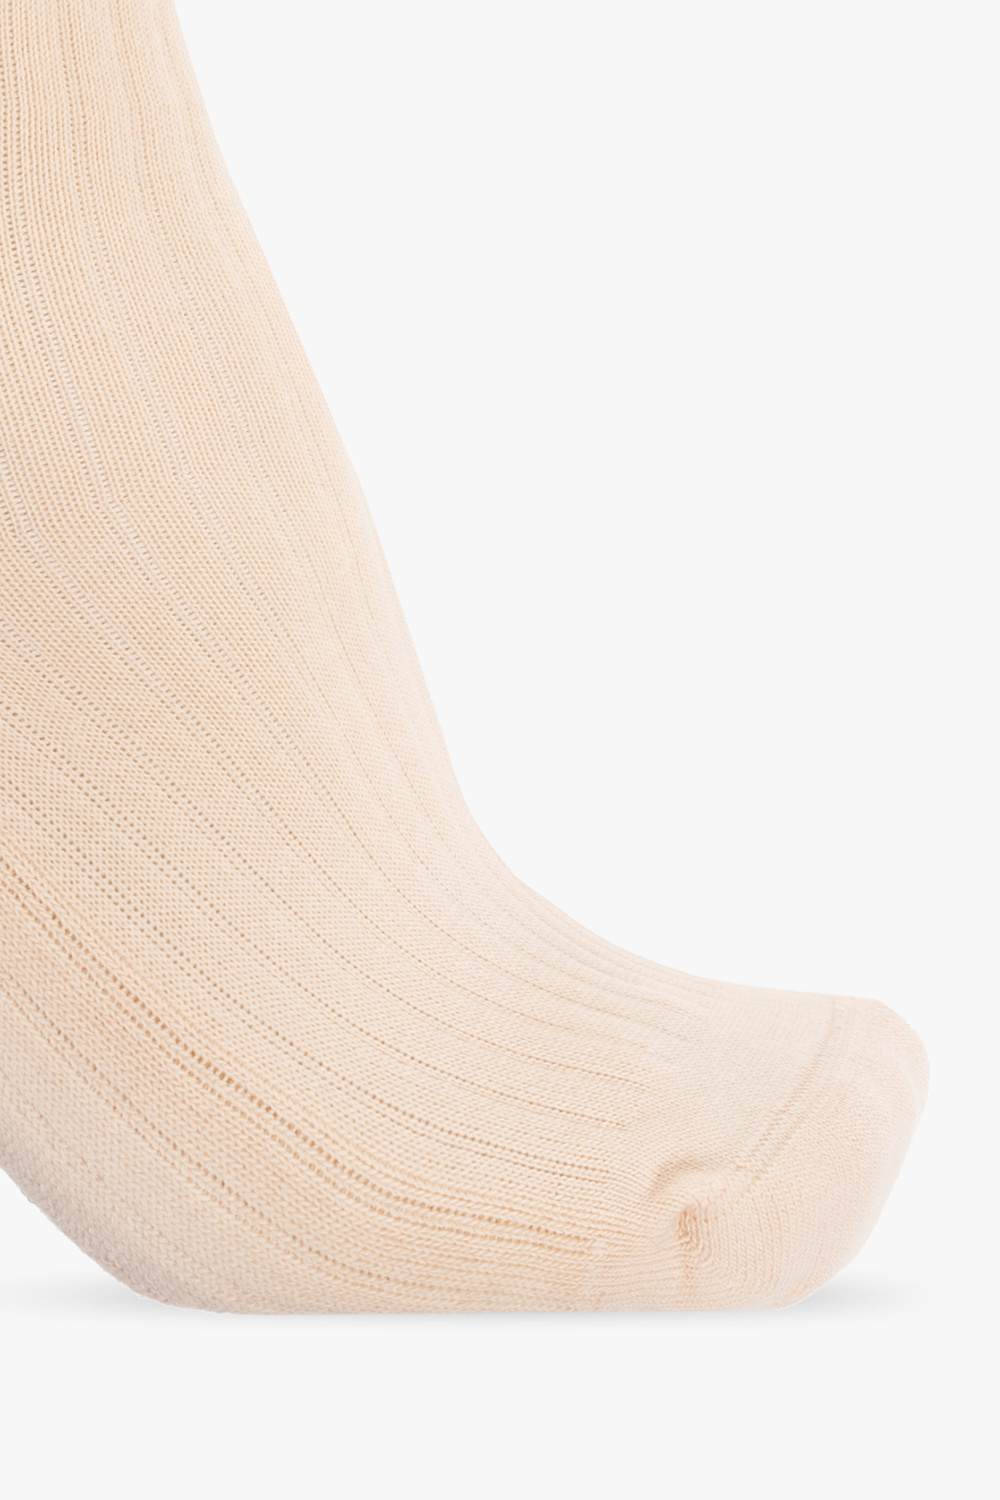 burberry Taschen Cotton socks